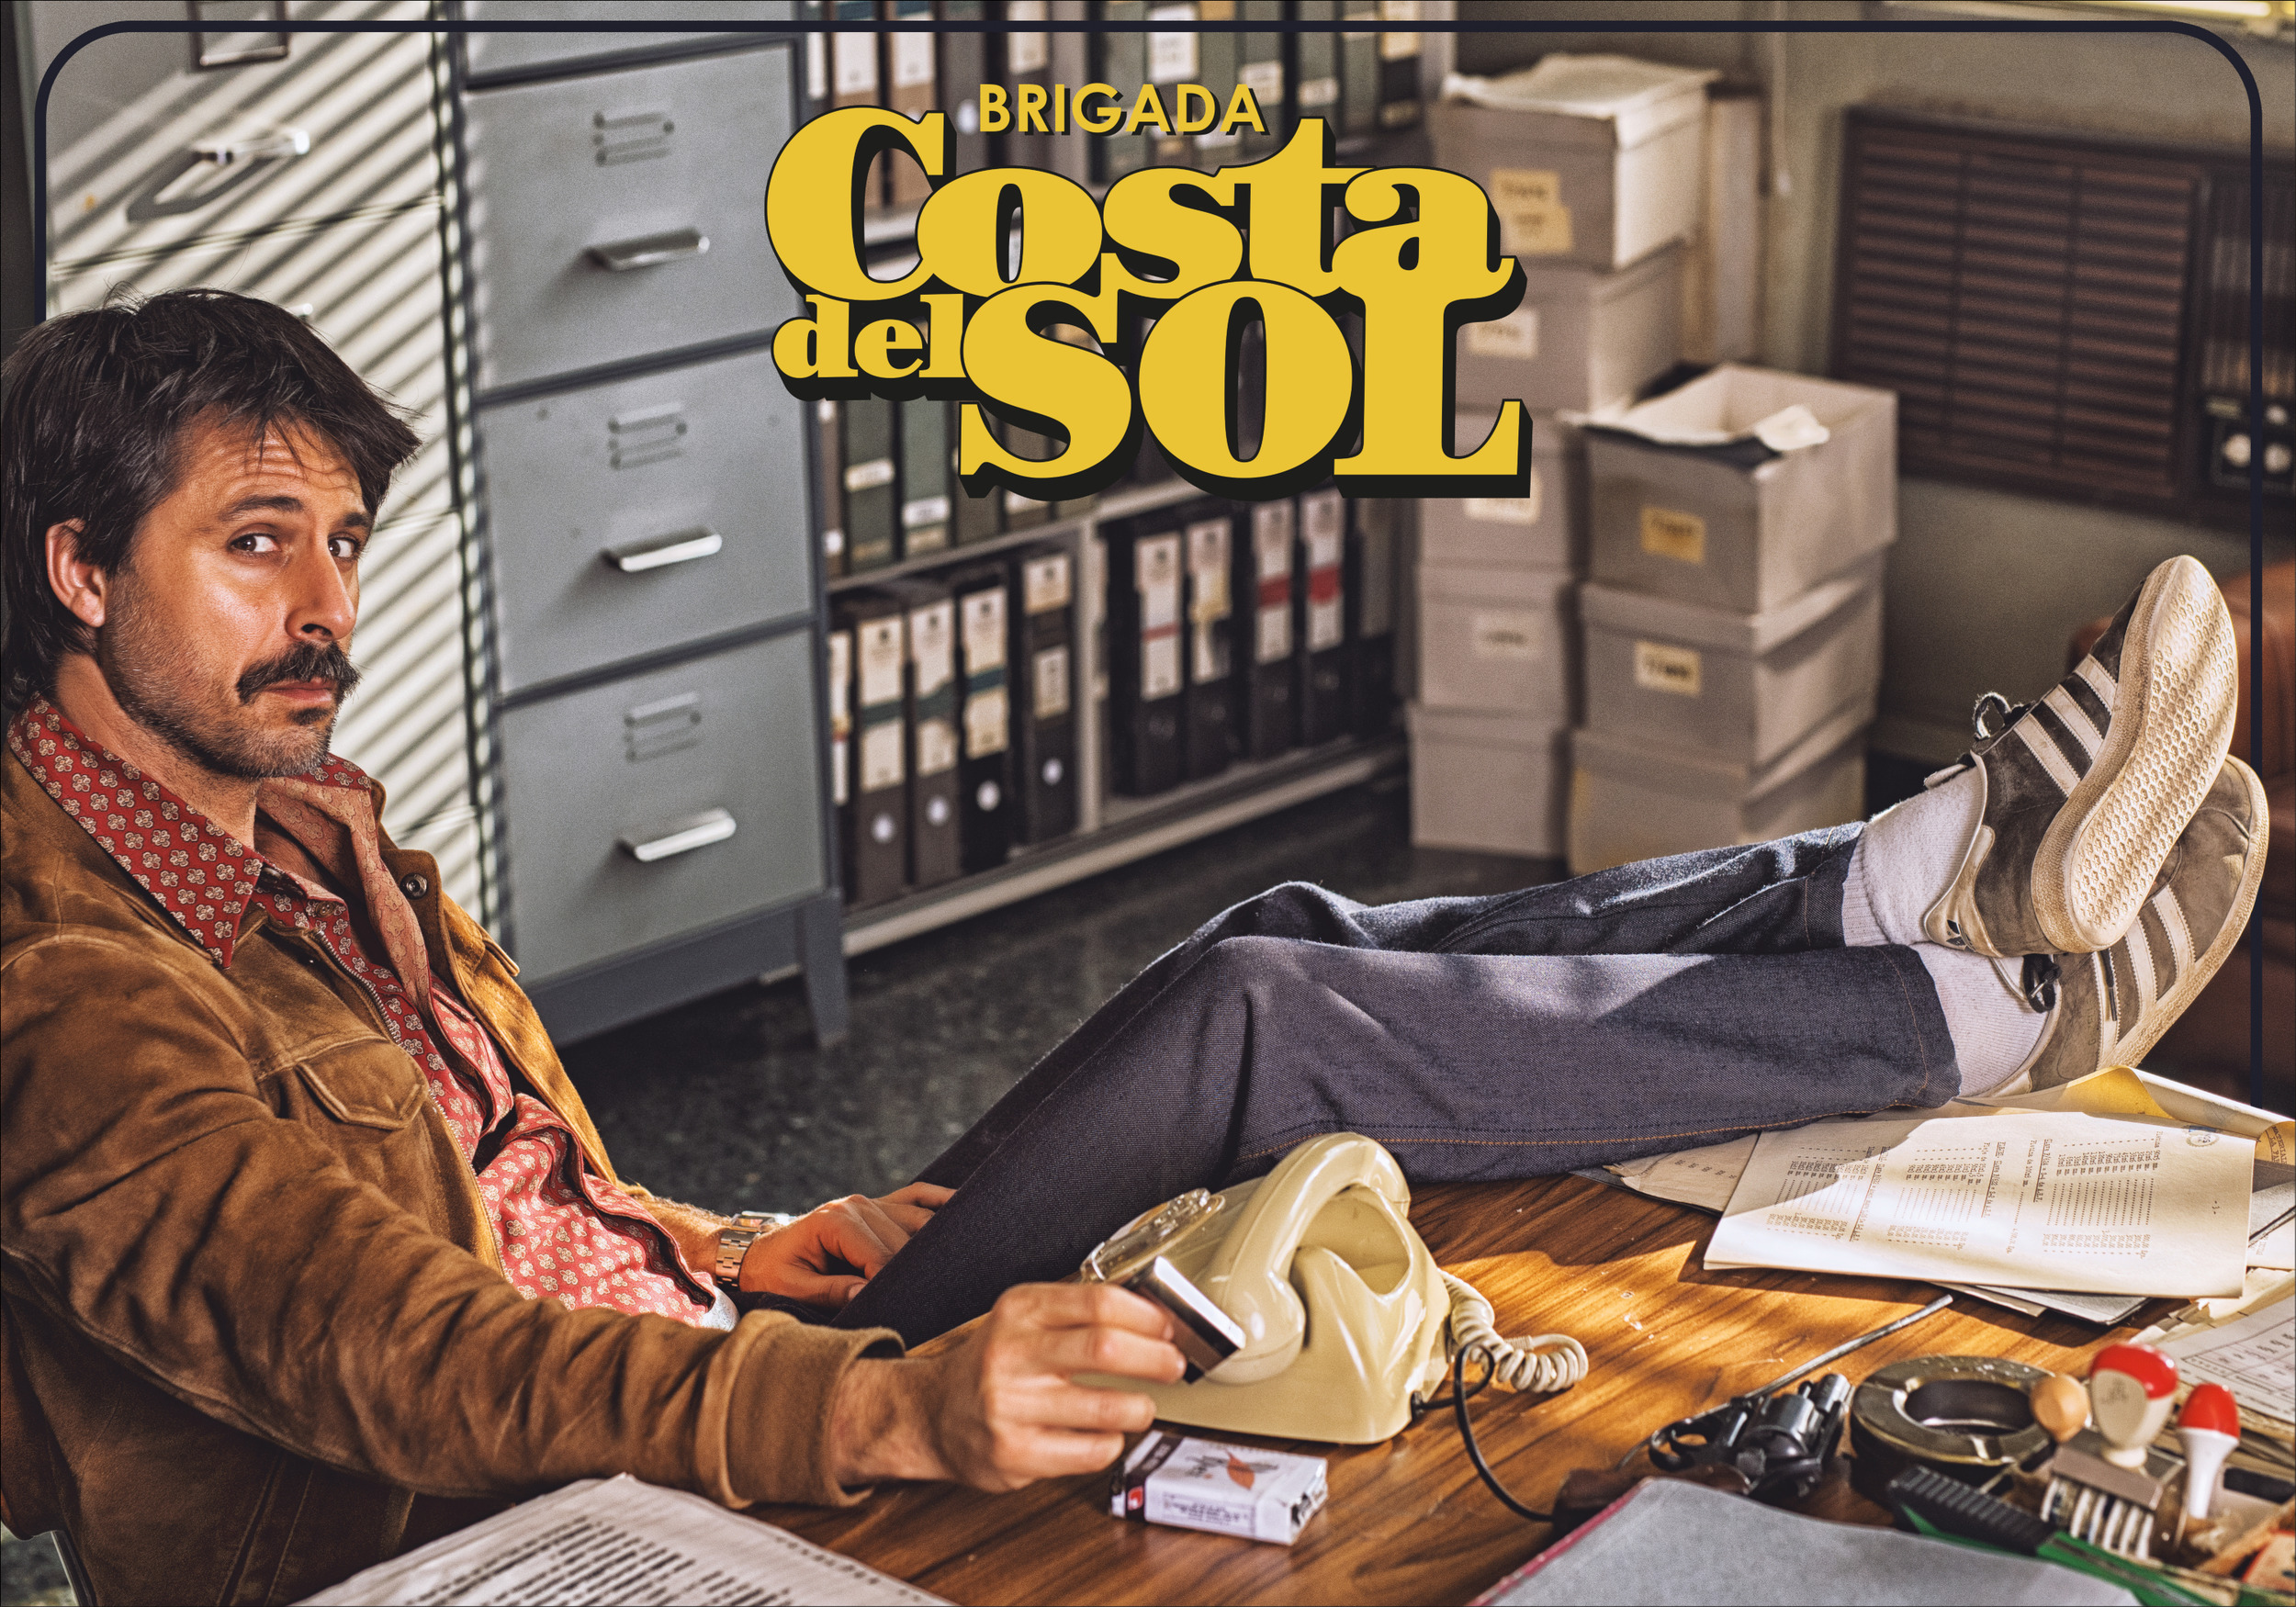 Mega Sized TV Poster Image for Brigada Costa del Sol (#9 of 23)